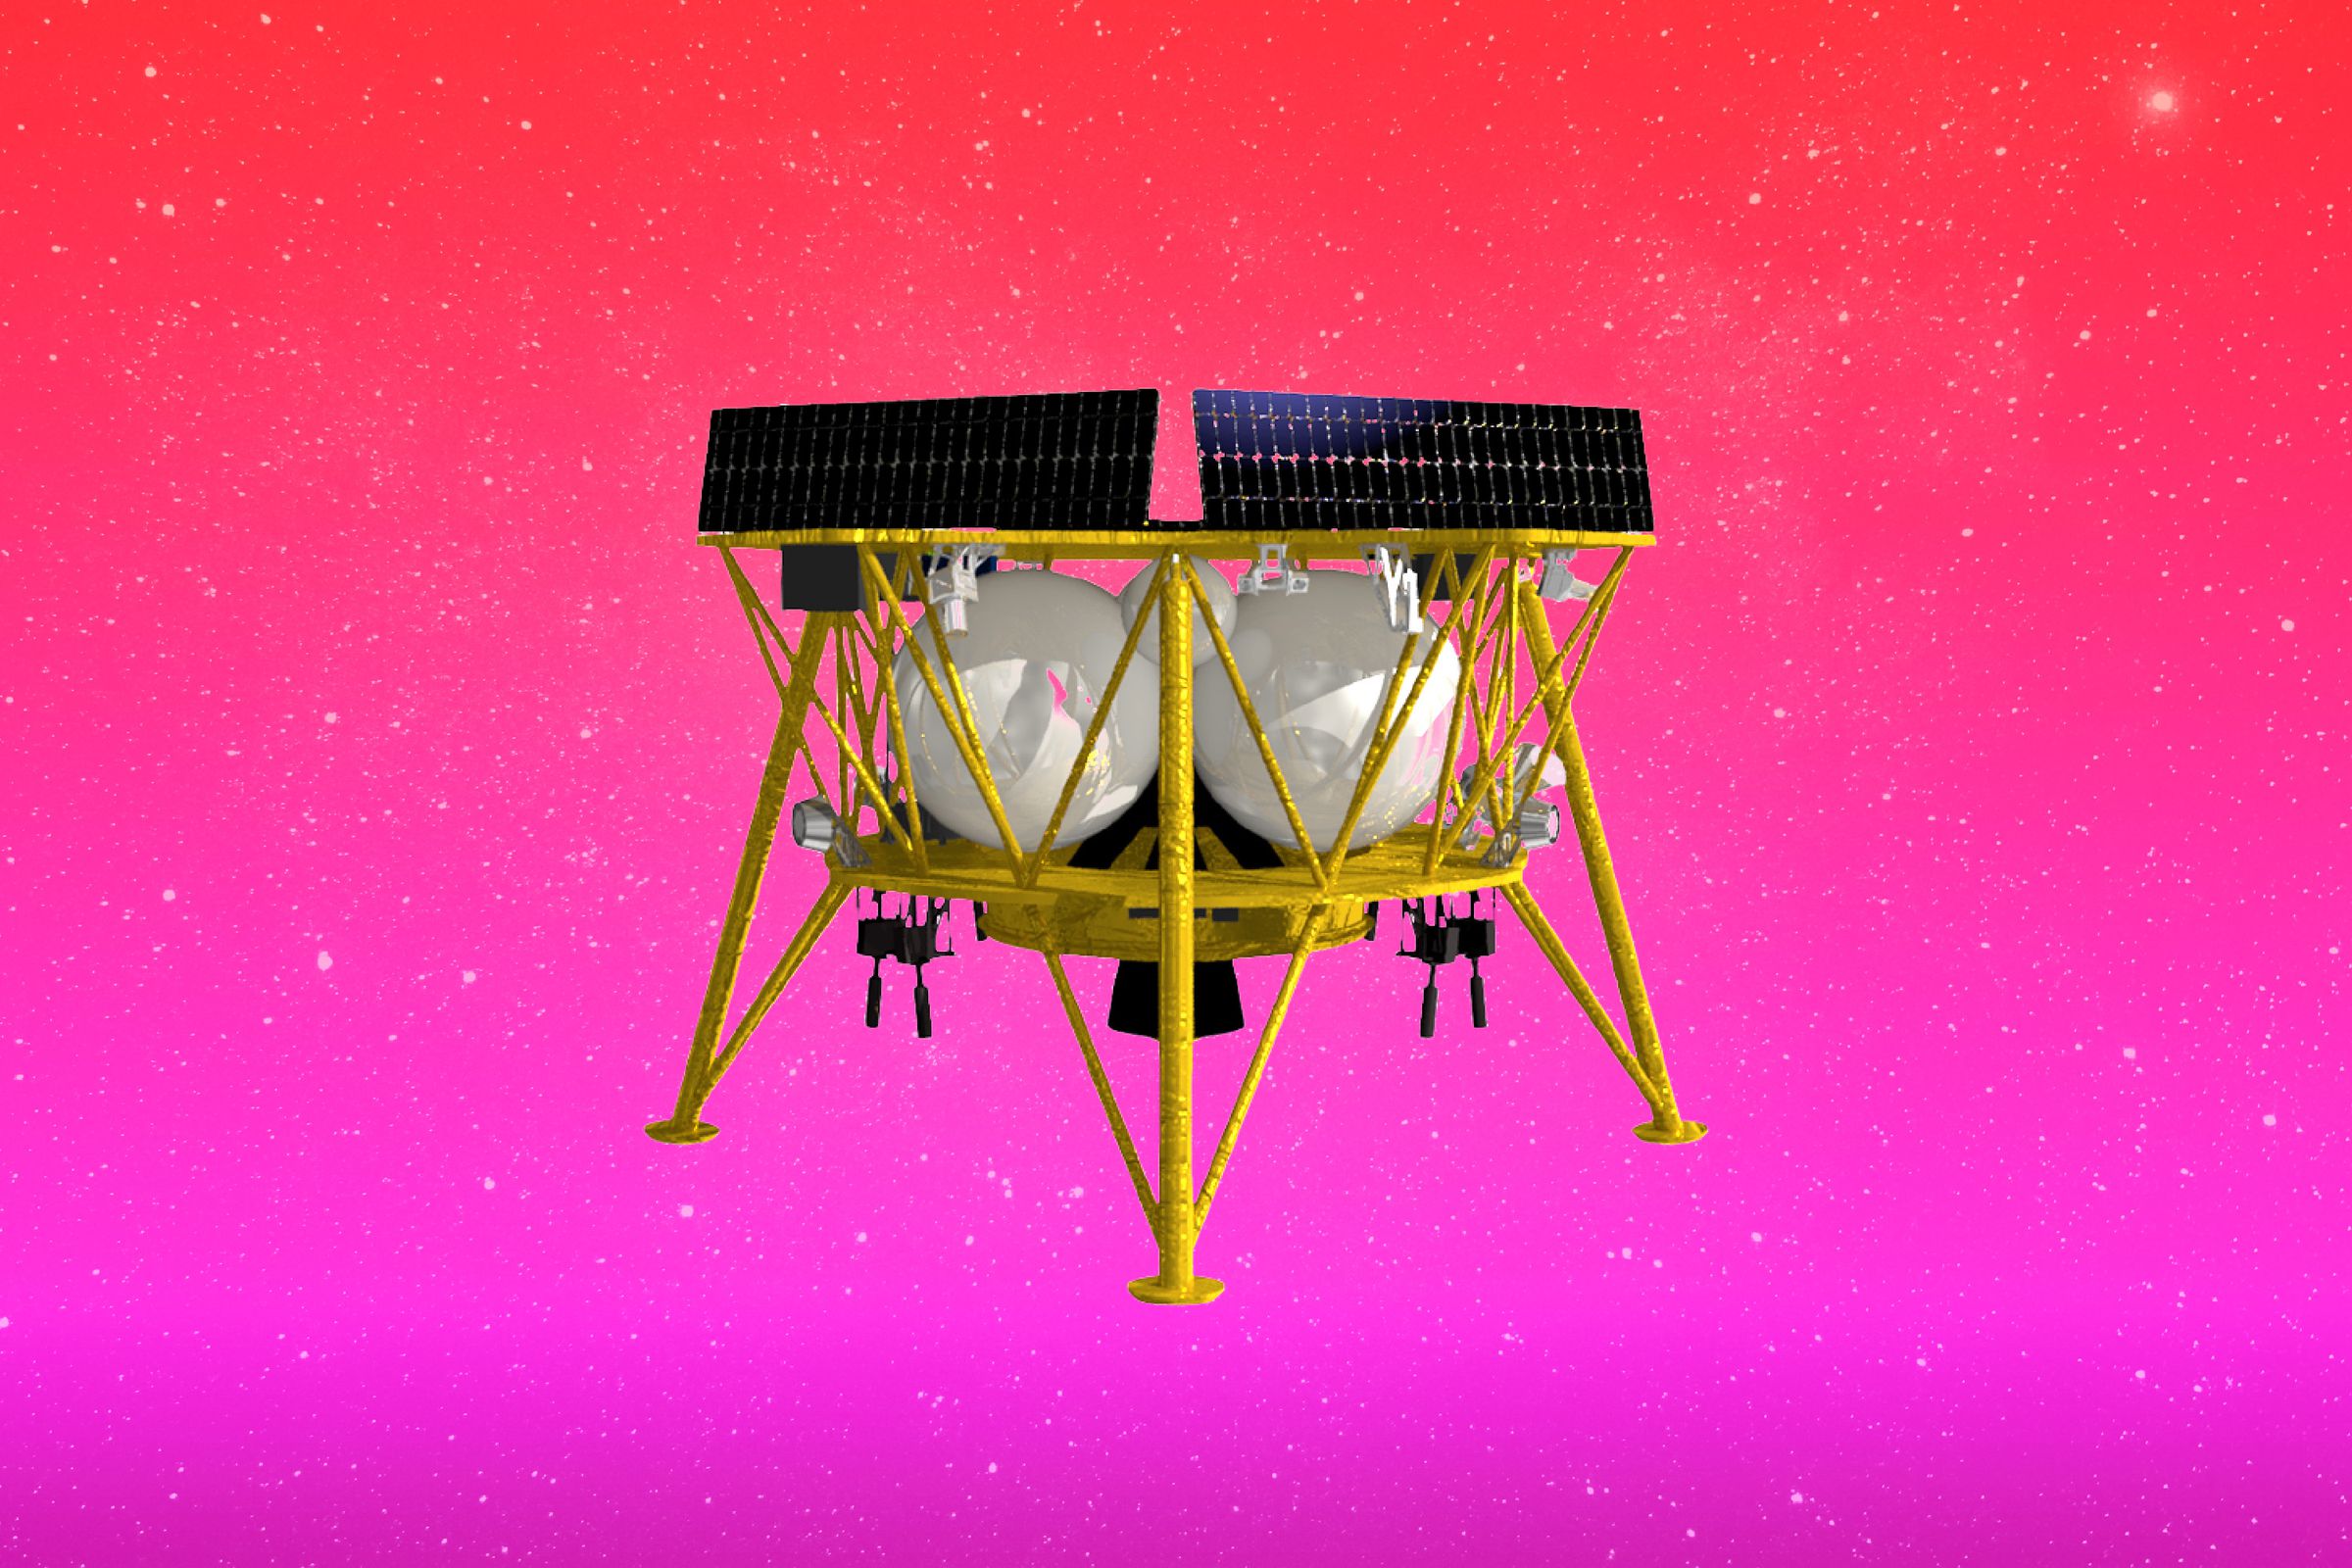 An artistic rendering of Firefly’s Genesis lander